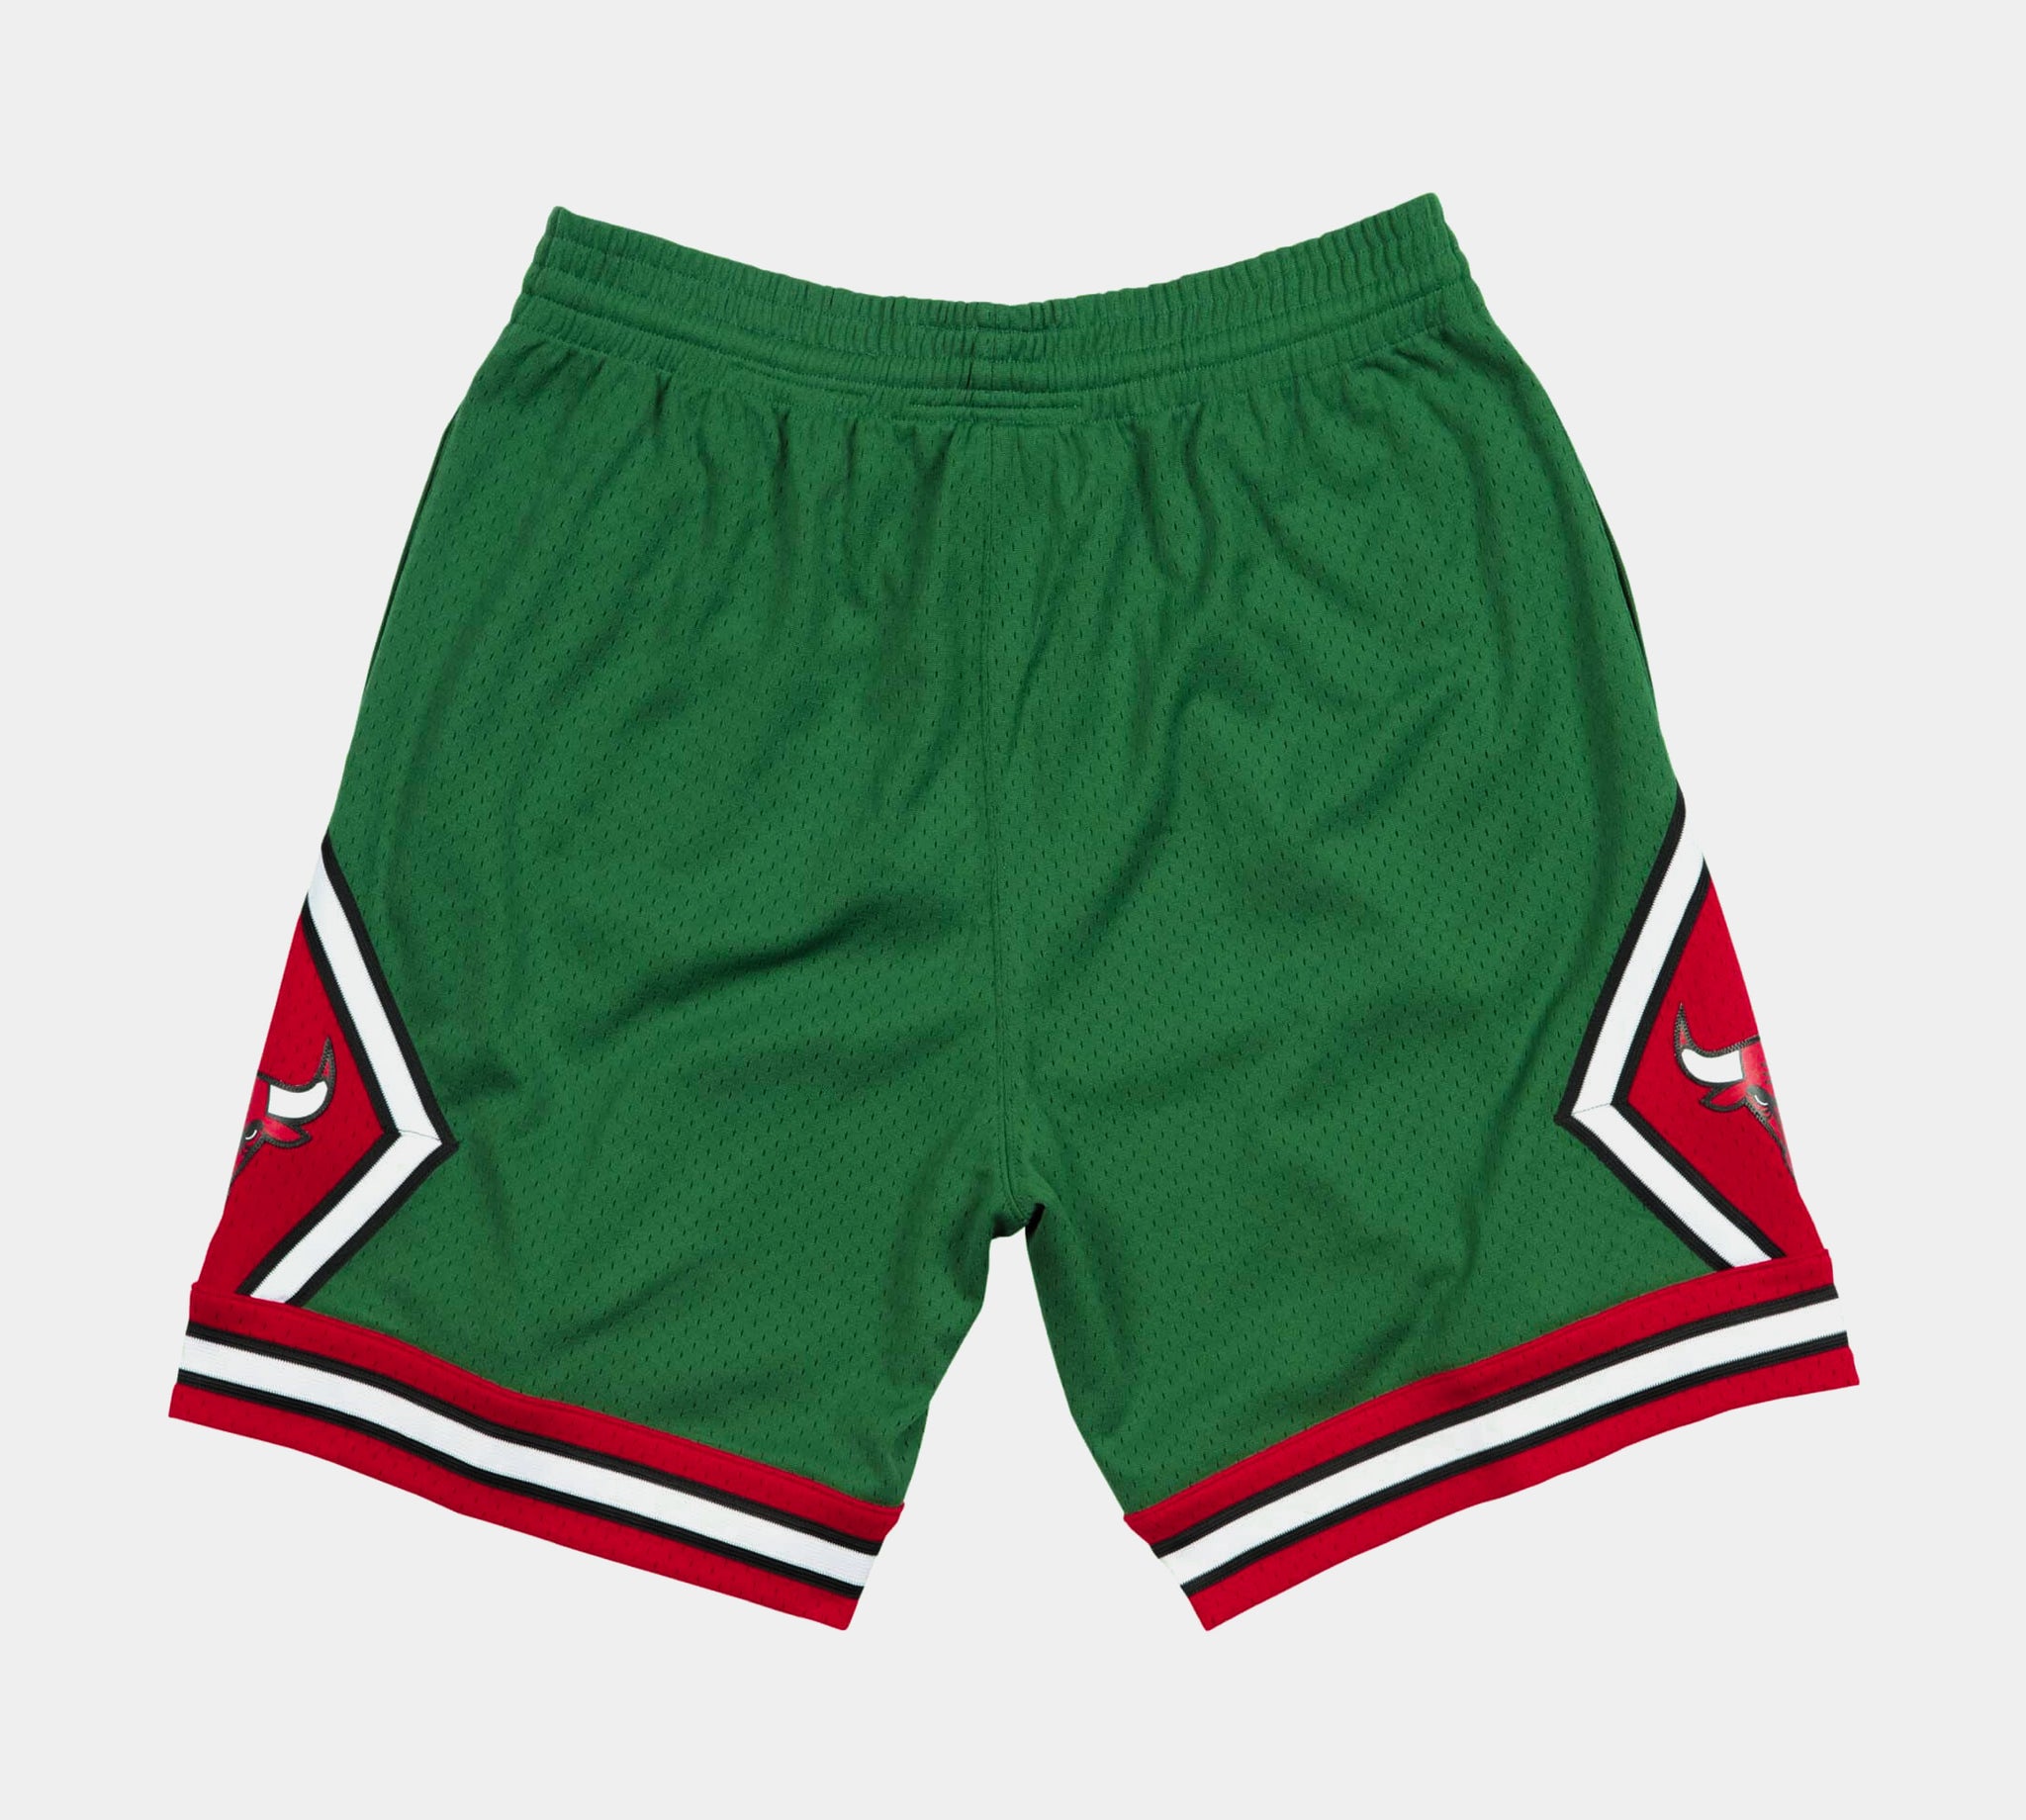 Mitchell & Ness Men's Chicago Bulls Green Swingman Shorts, Medium